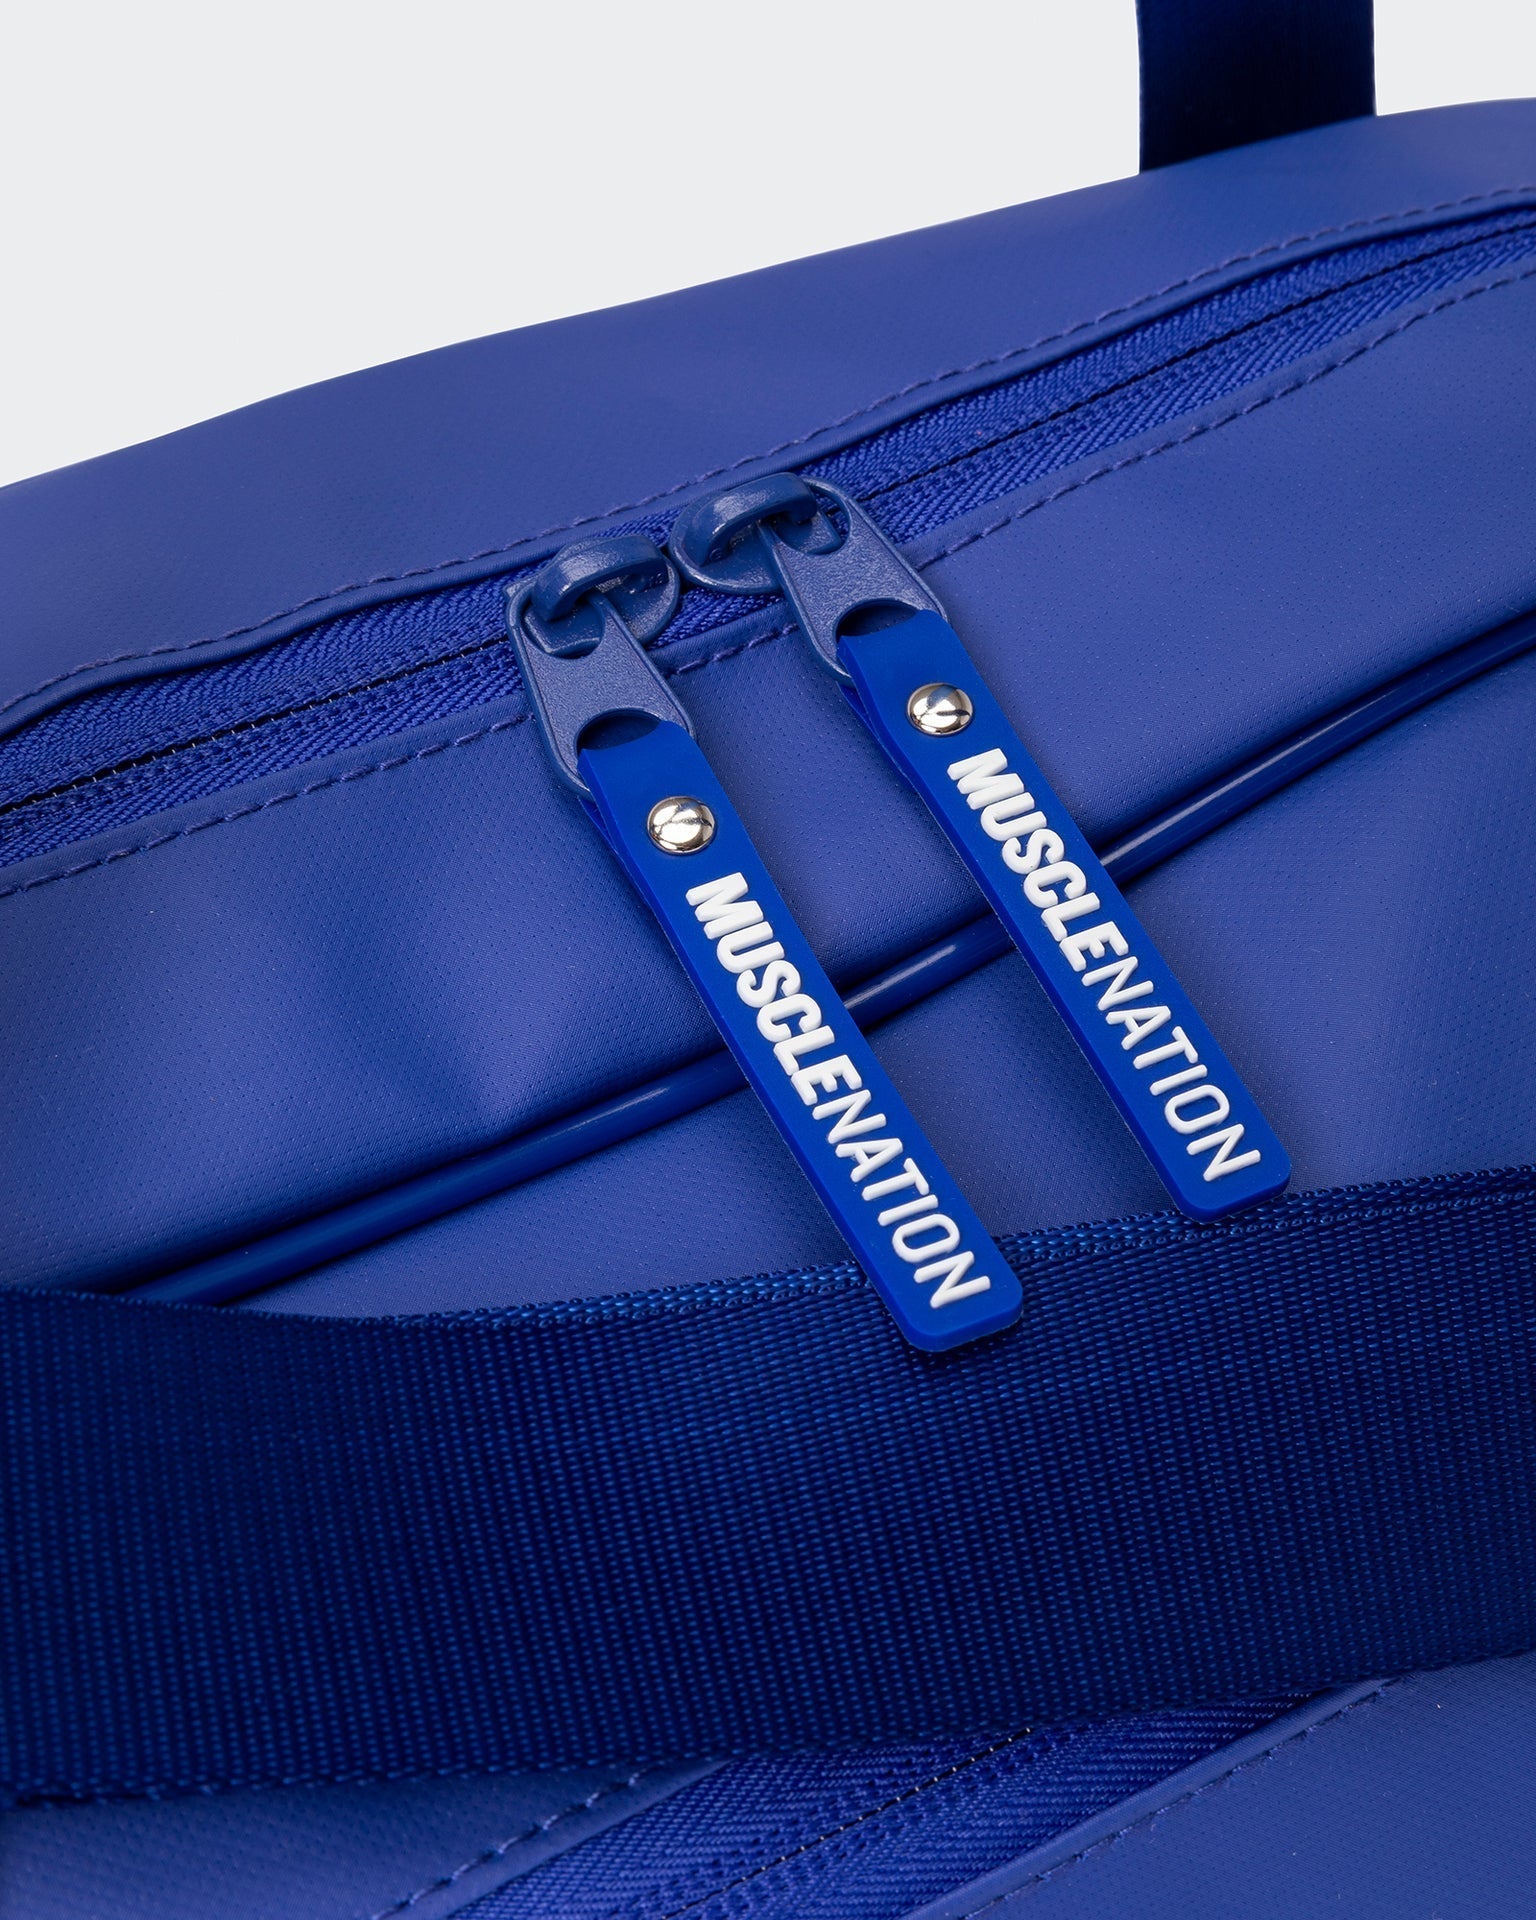 Muscle Nation Bags Default MN Sports Bag - Bondi Blue